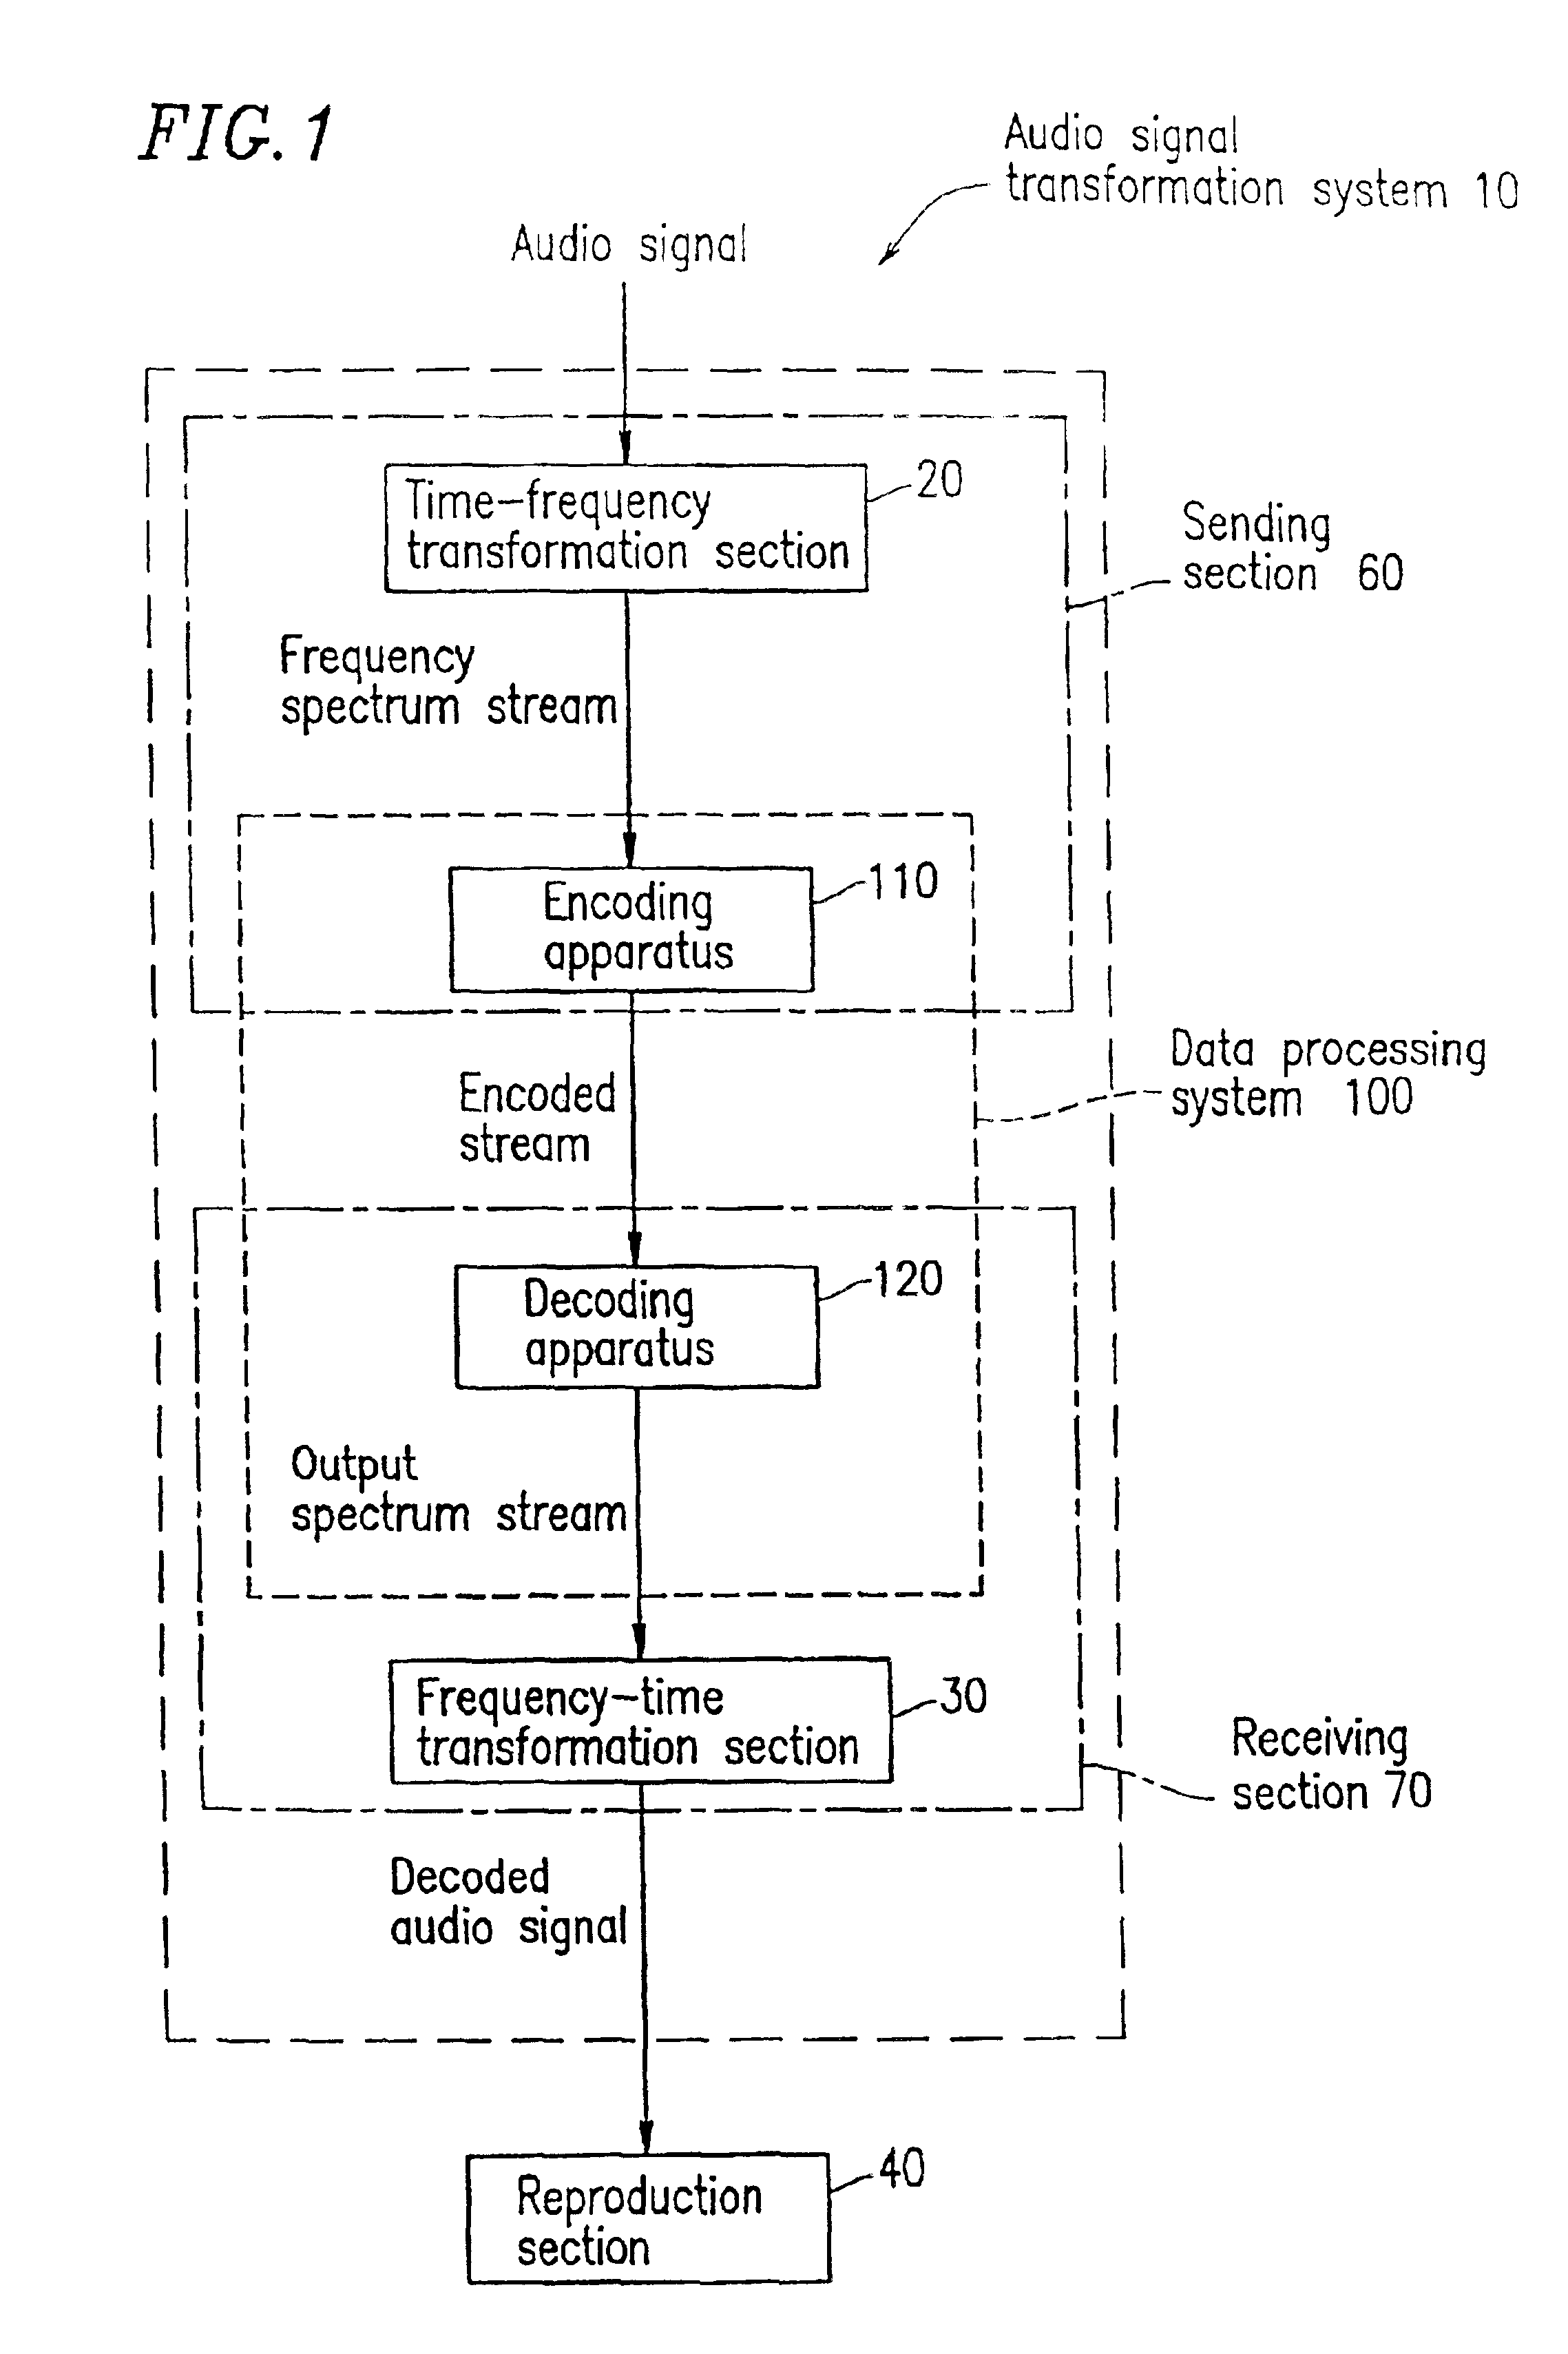 Encoding apparatus and decoding apparatus